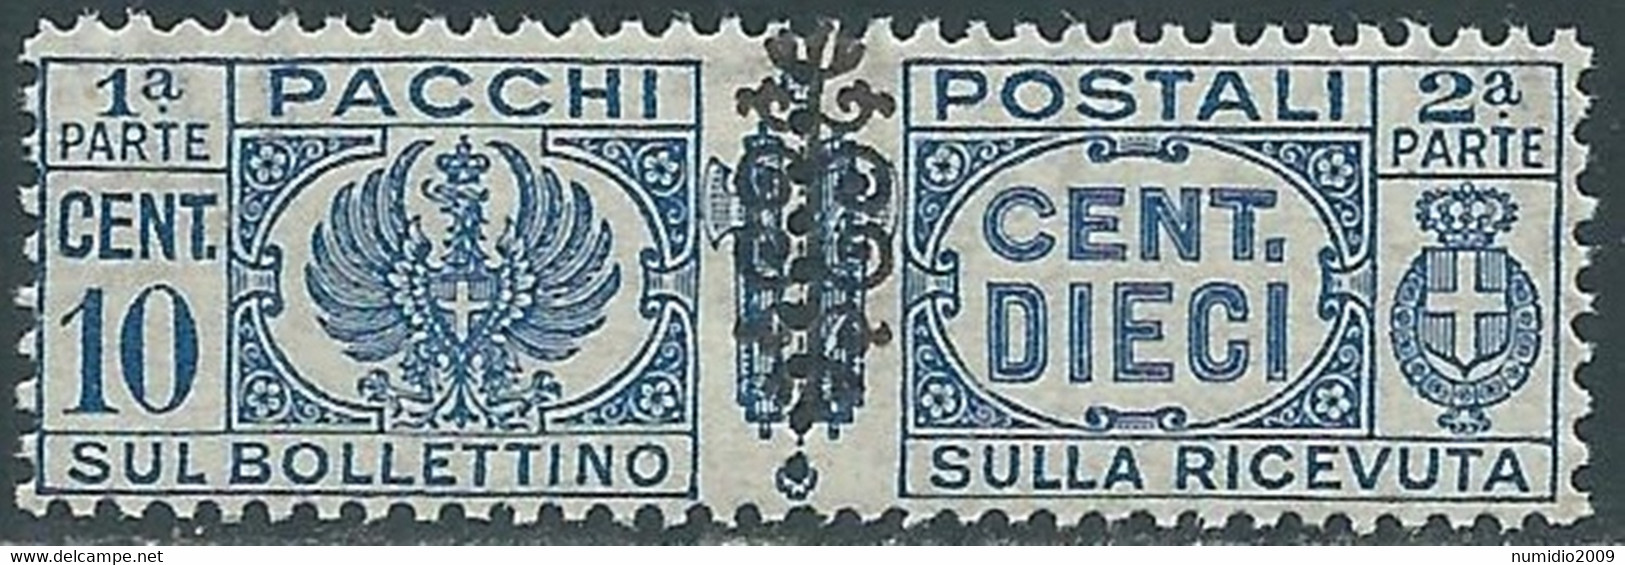 1945 LUOGOTENENZA PACCHI POSTALI 10 CENT MNH ** - CZ19-2 - Postal Parcels